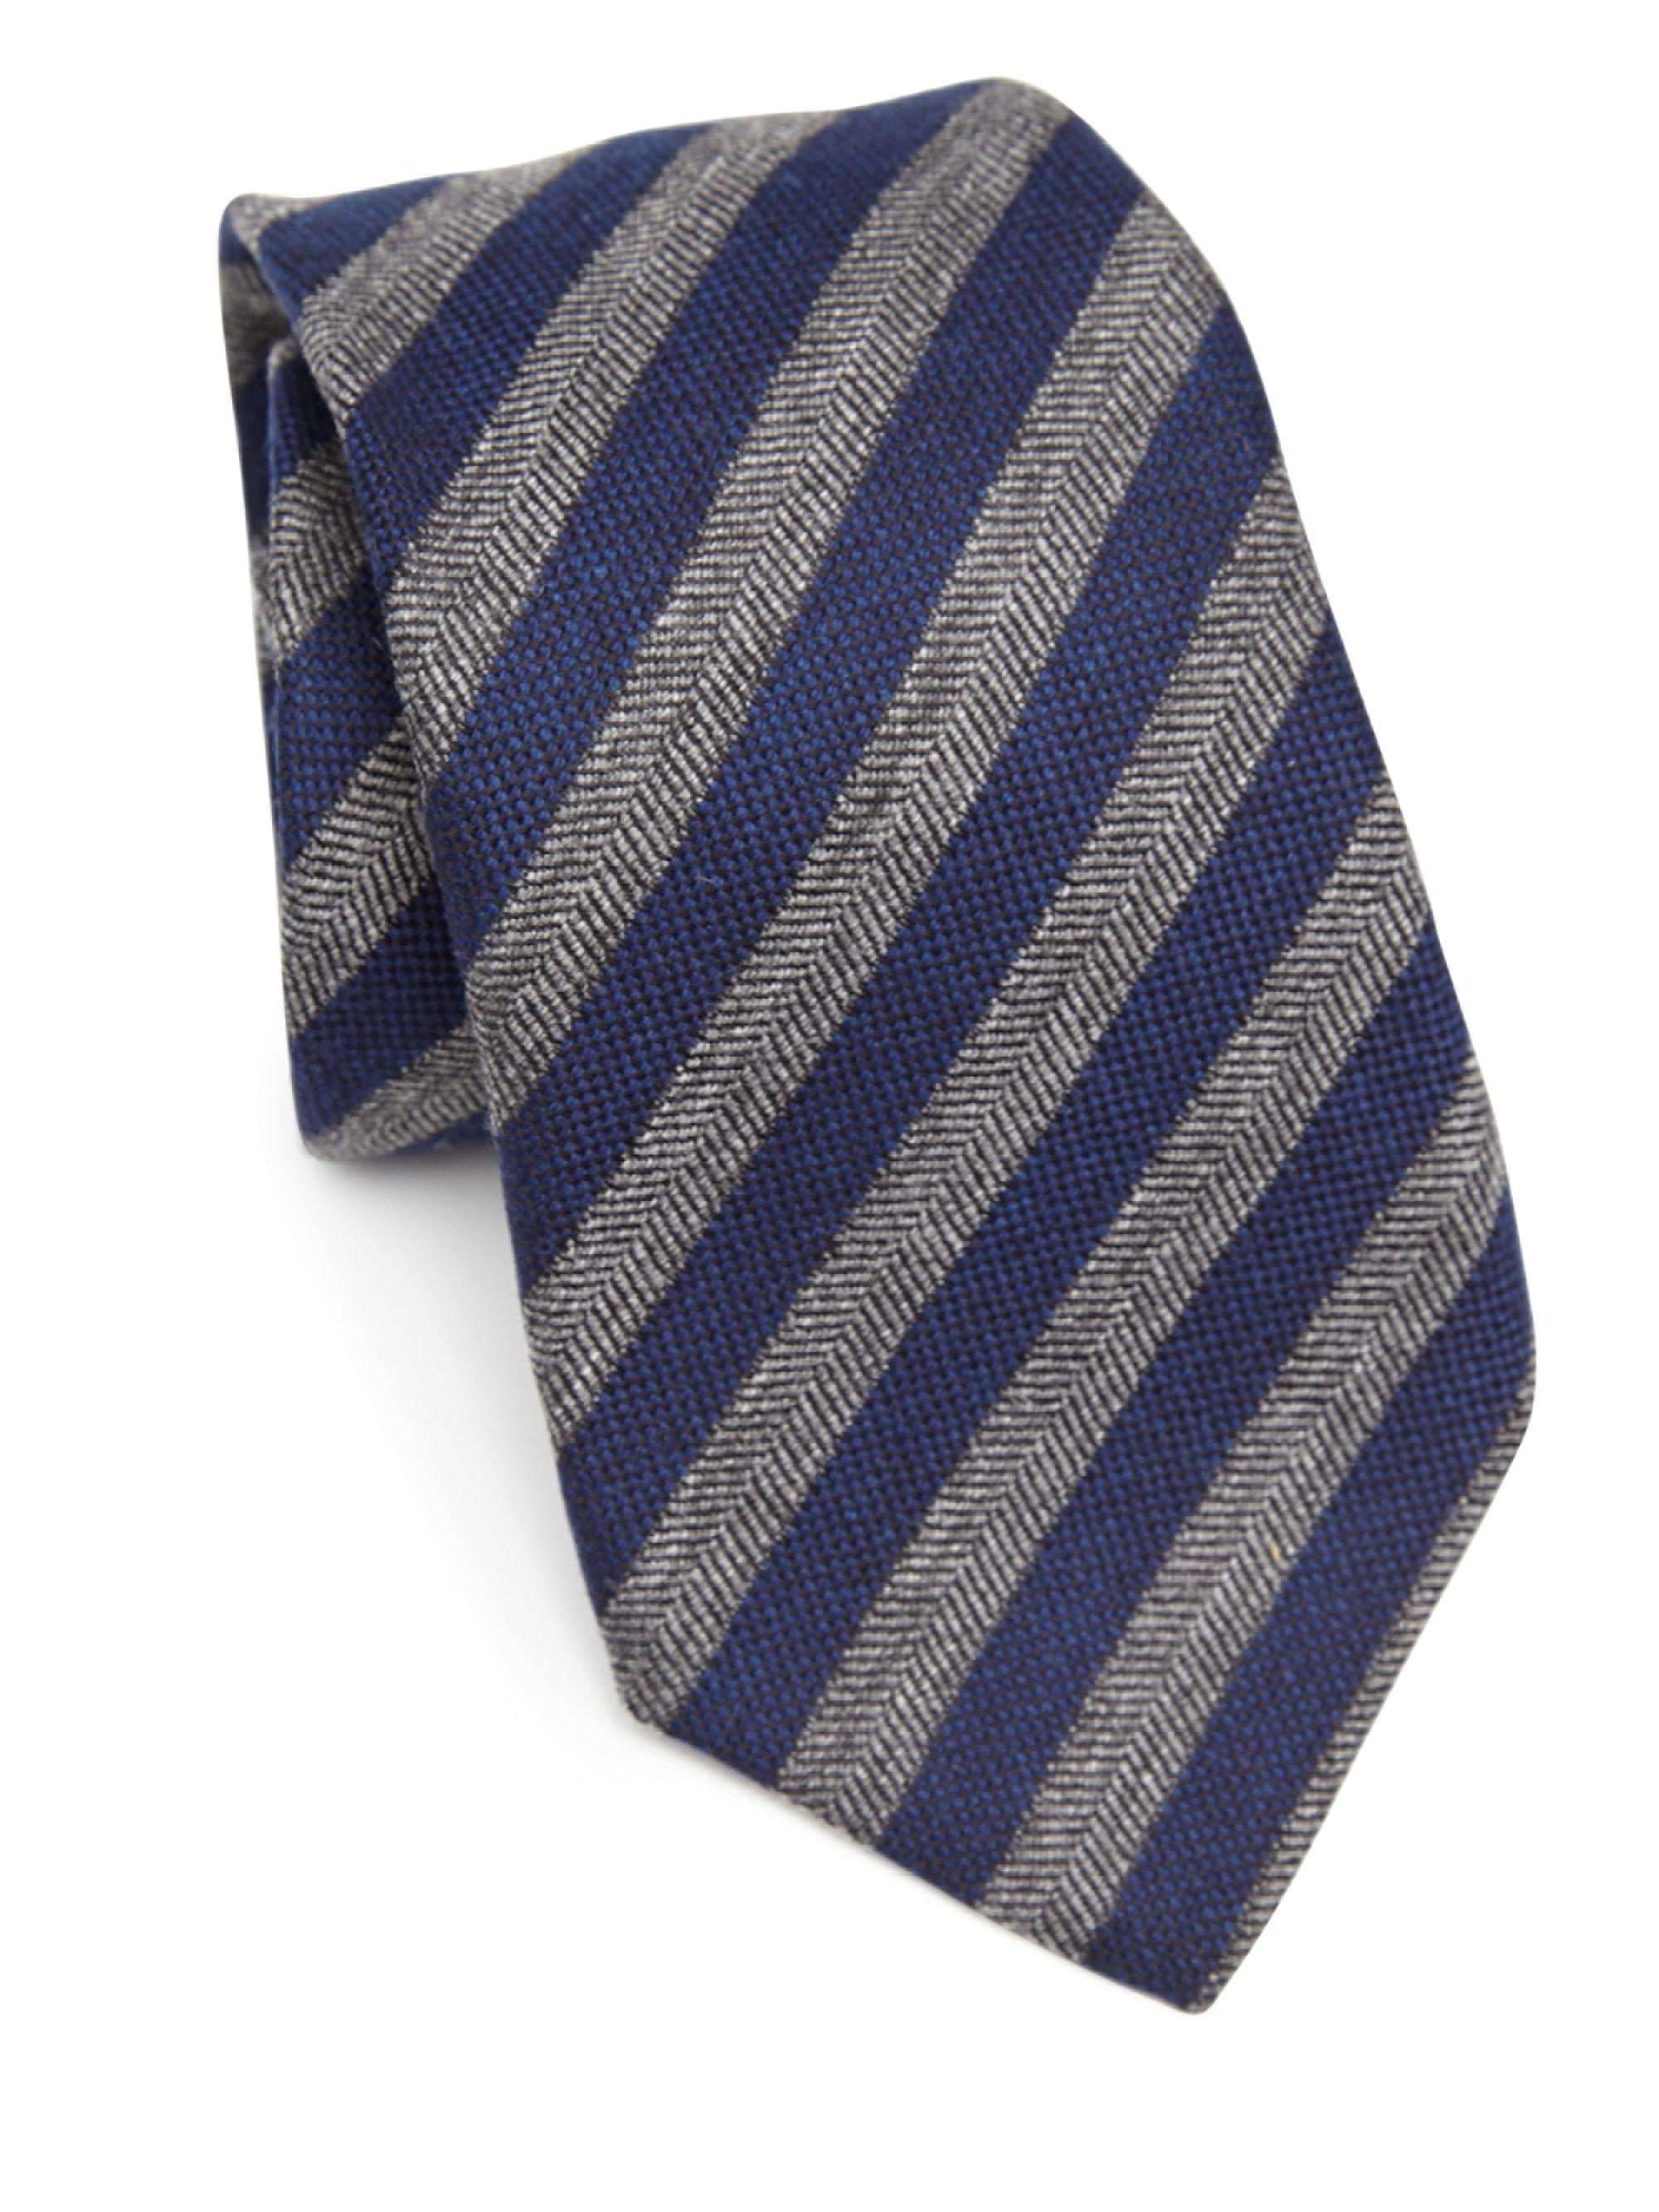 Lyst - Kiton Herringbone Striped Tie in Blue for Men